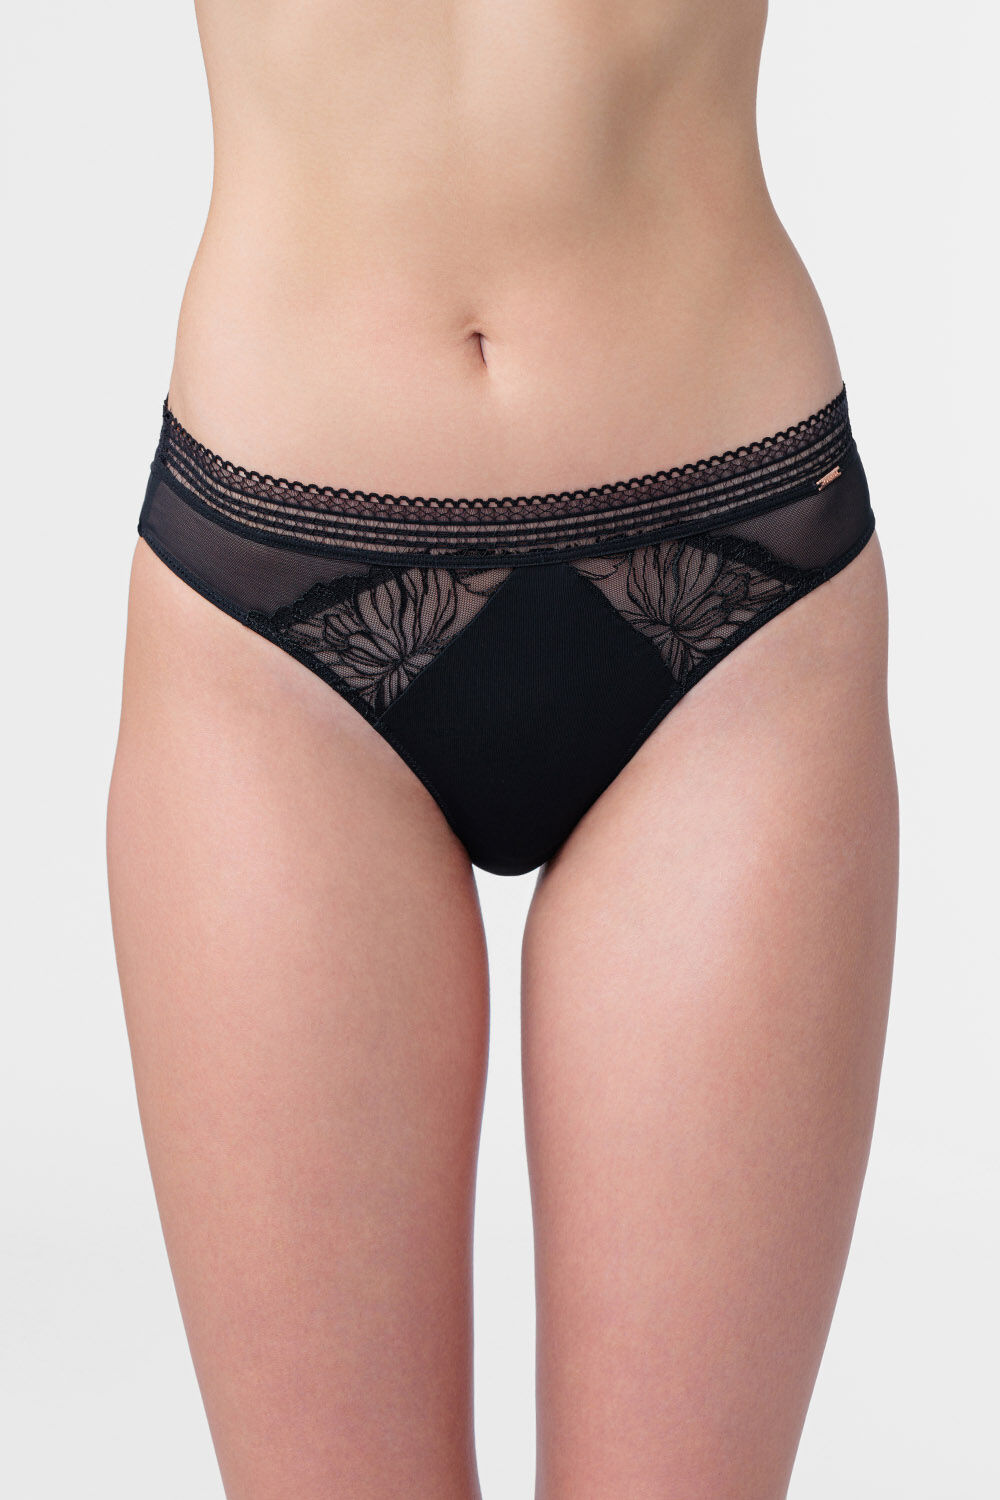 DORINA Women’s Black Lace Stylish Brazilian Briefs, Size: 14